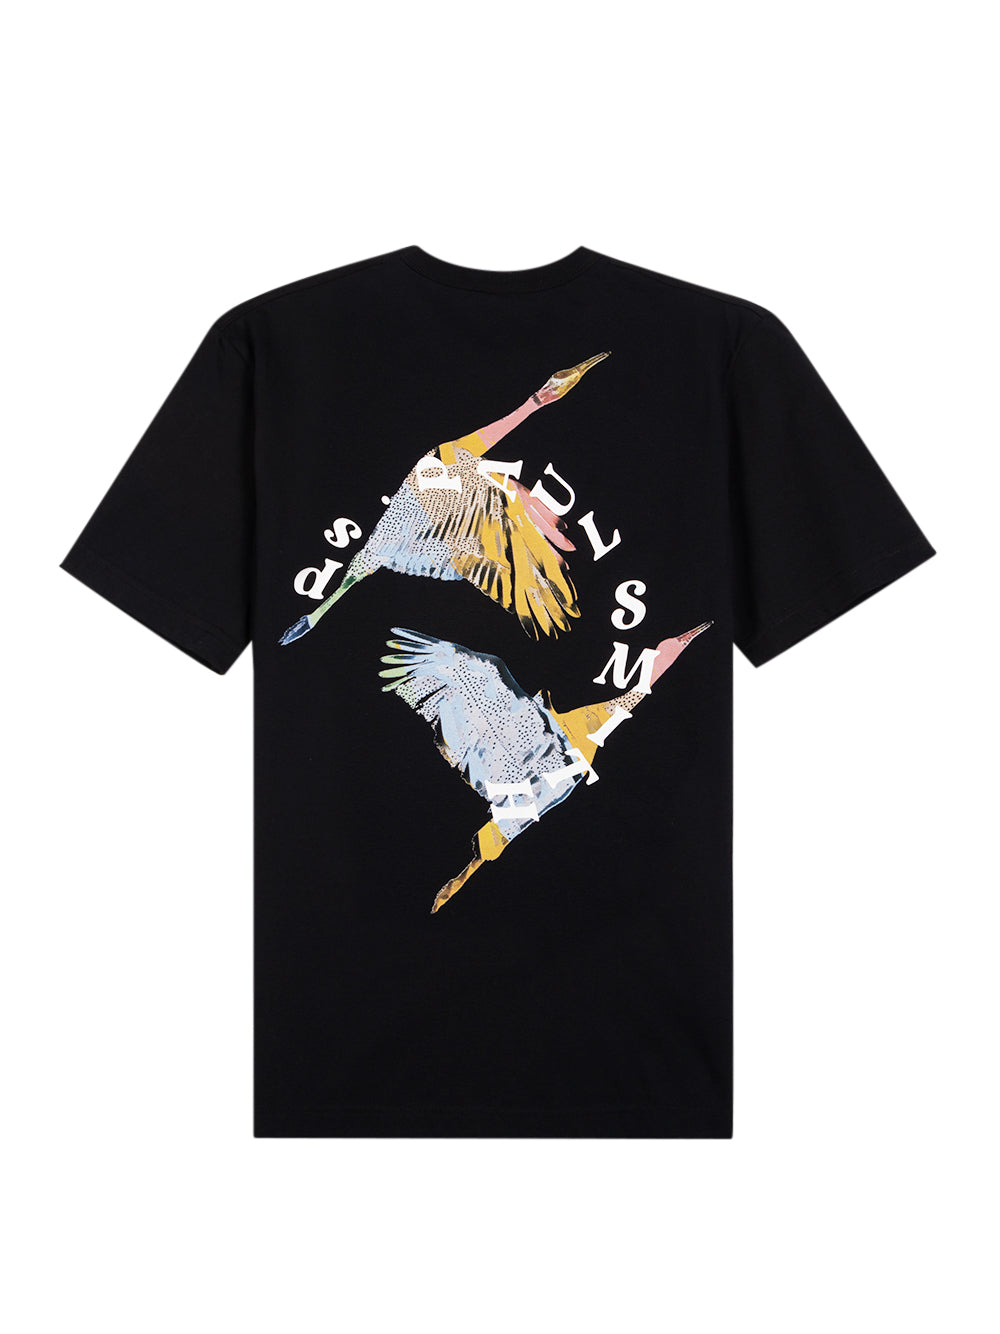 Flying Birds Print T-shirt (Black)